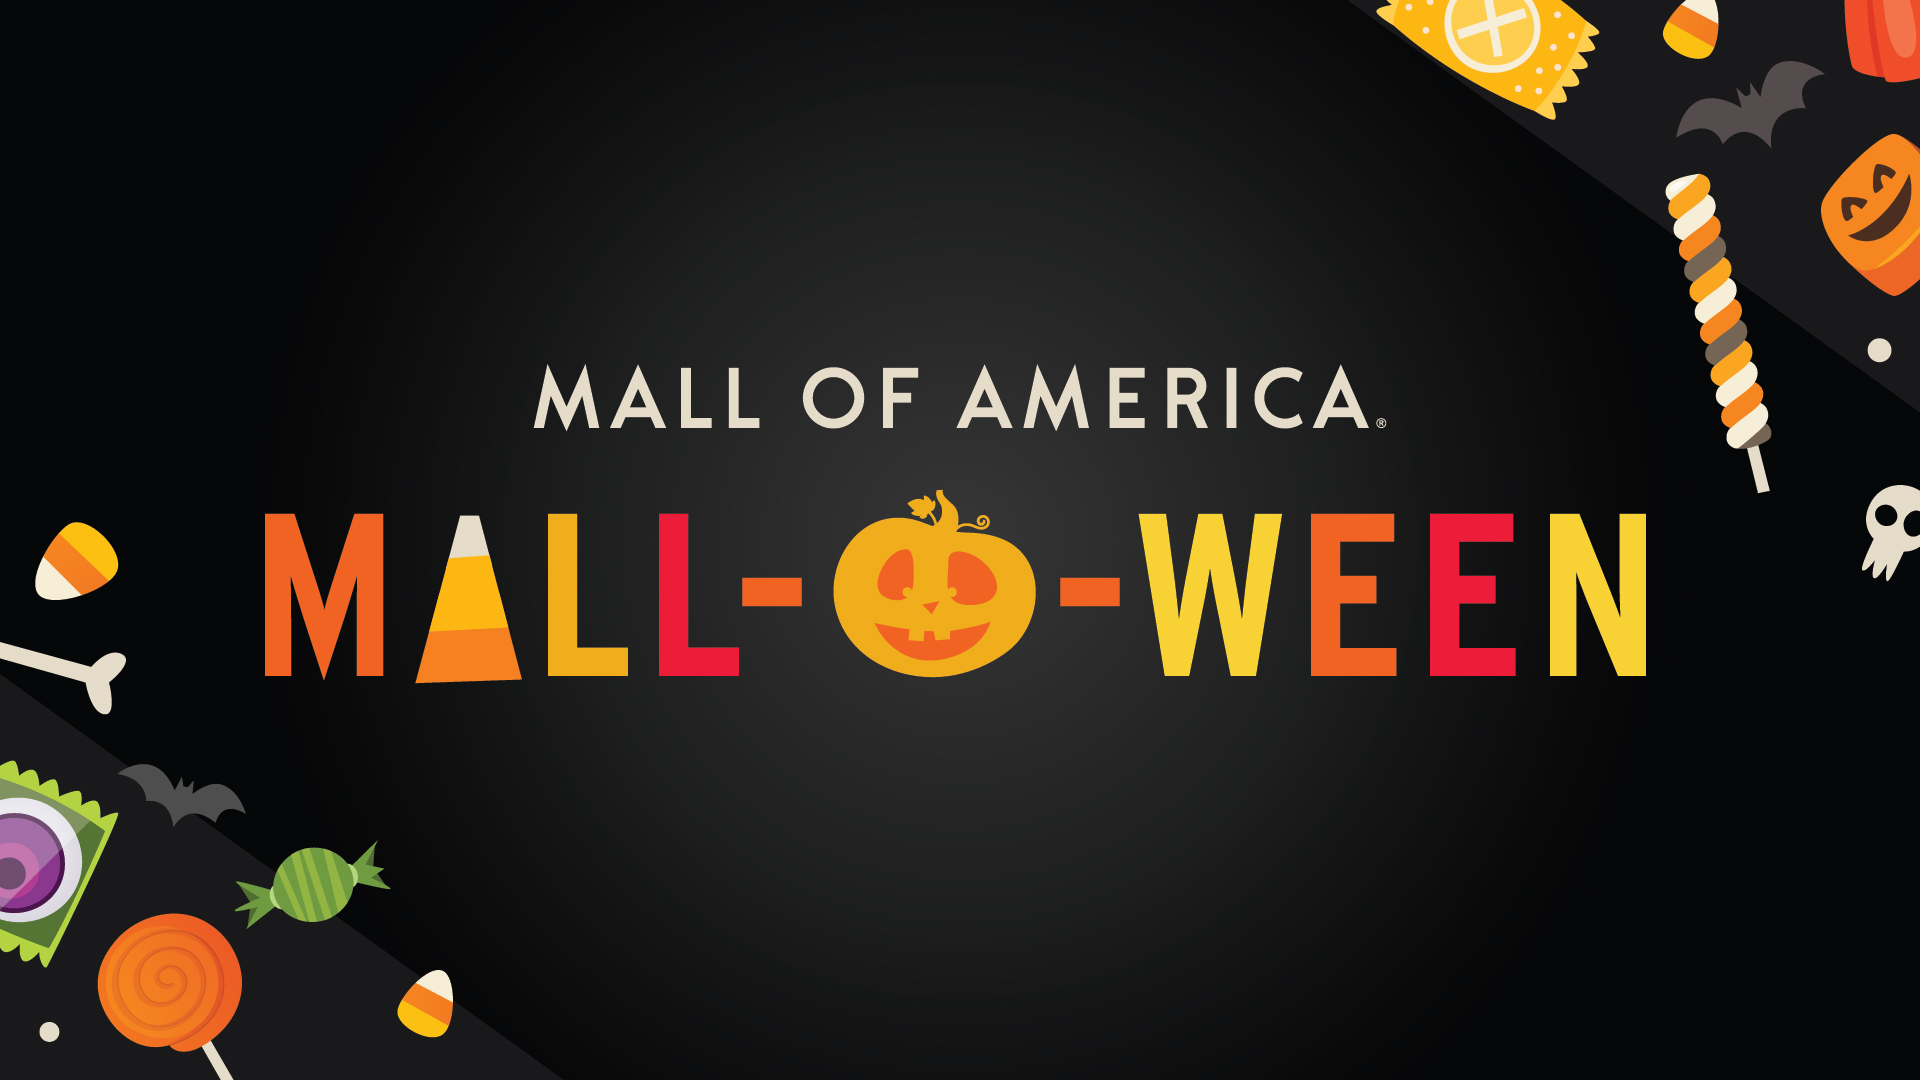 Mall-O-Ween  Mall of America®